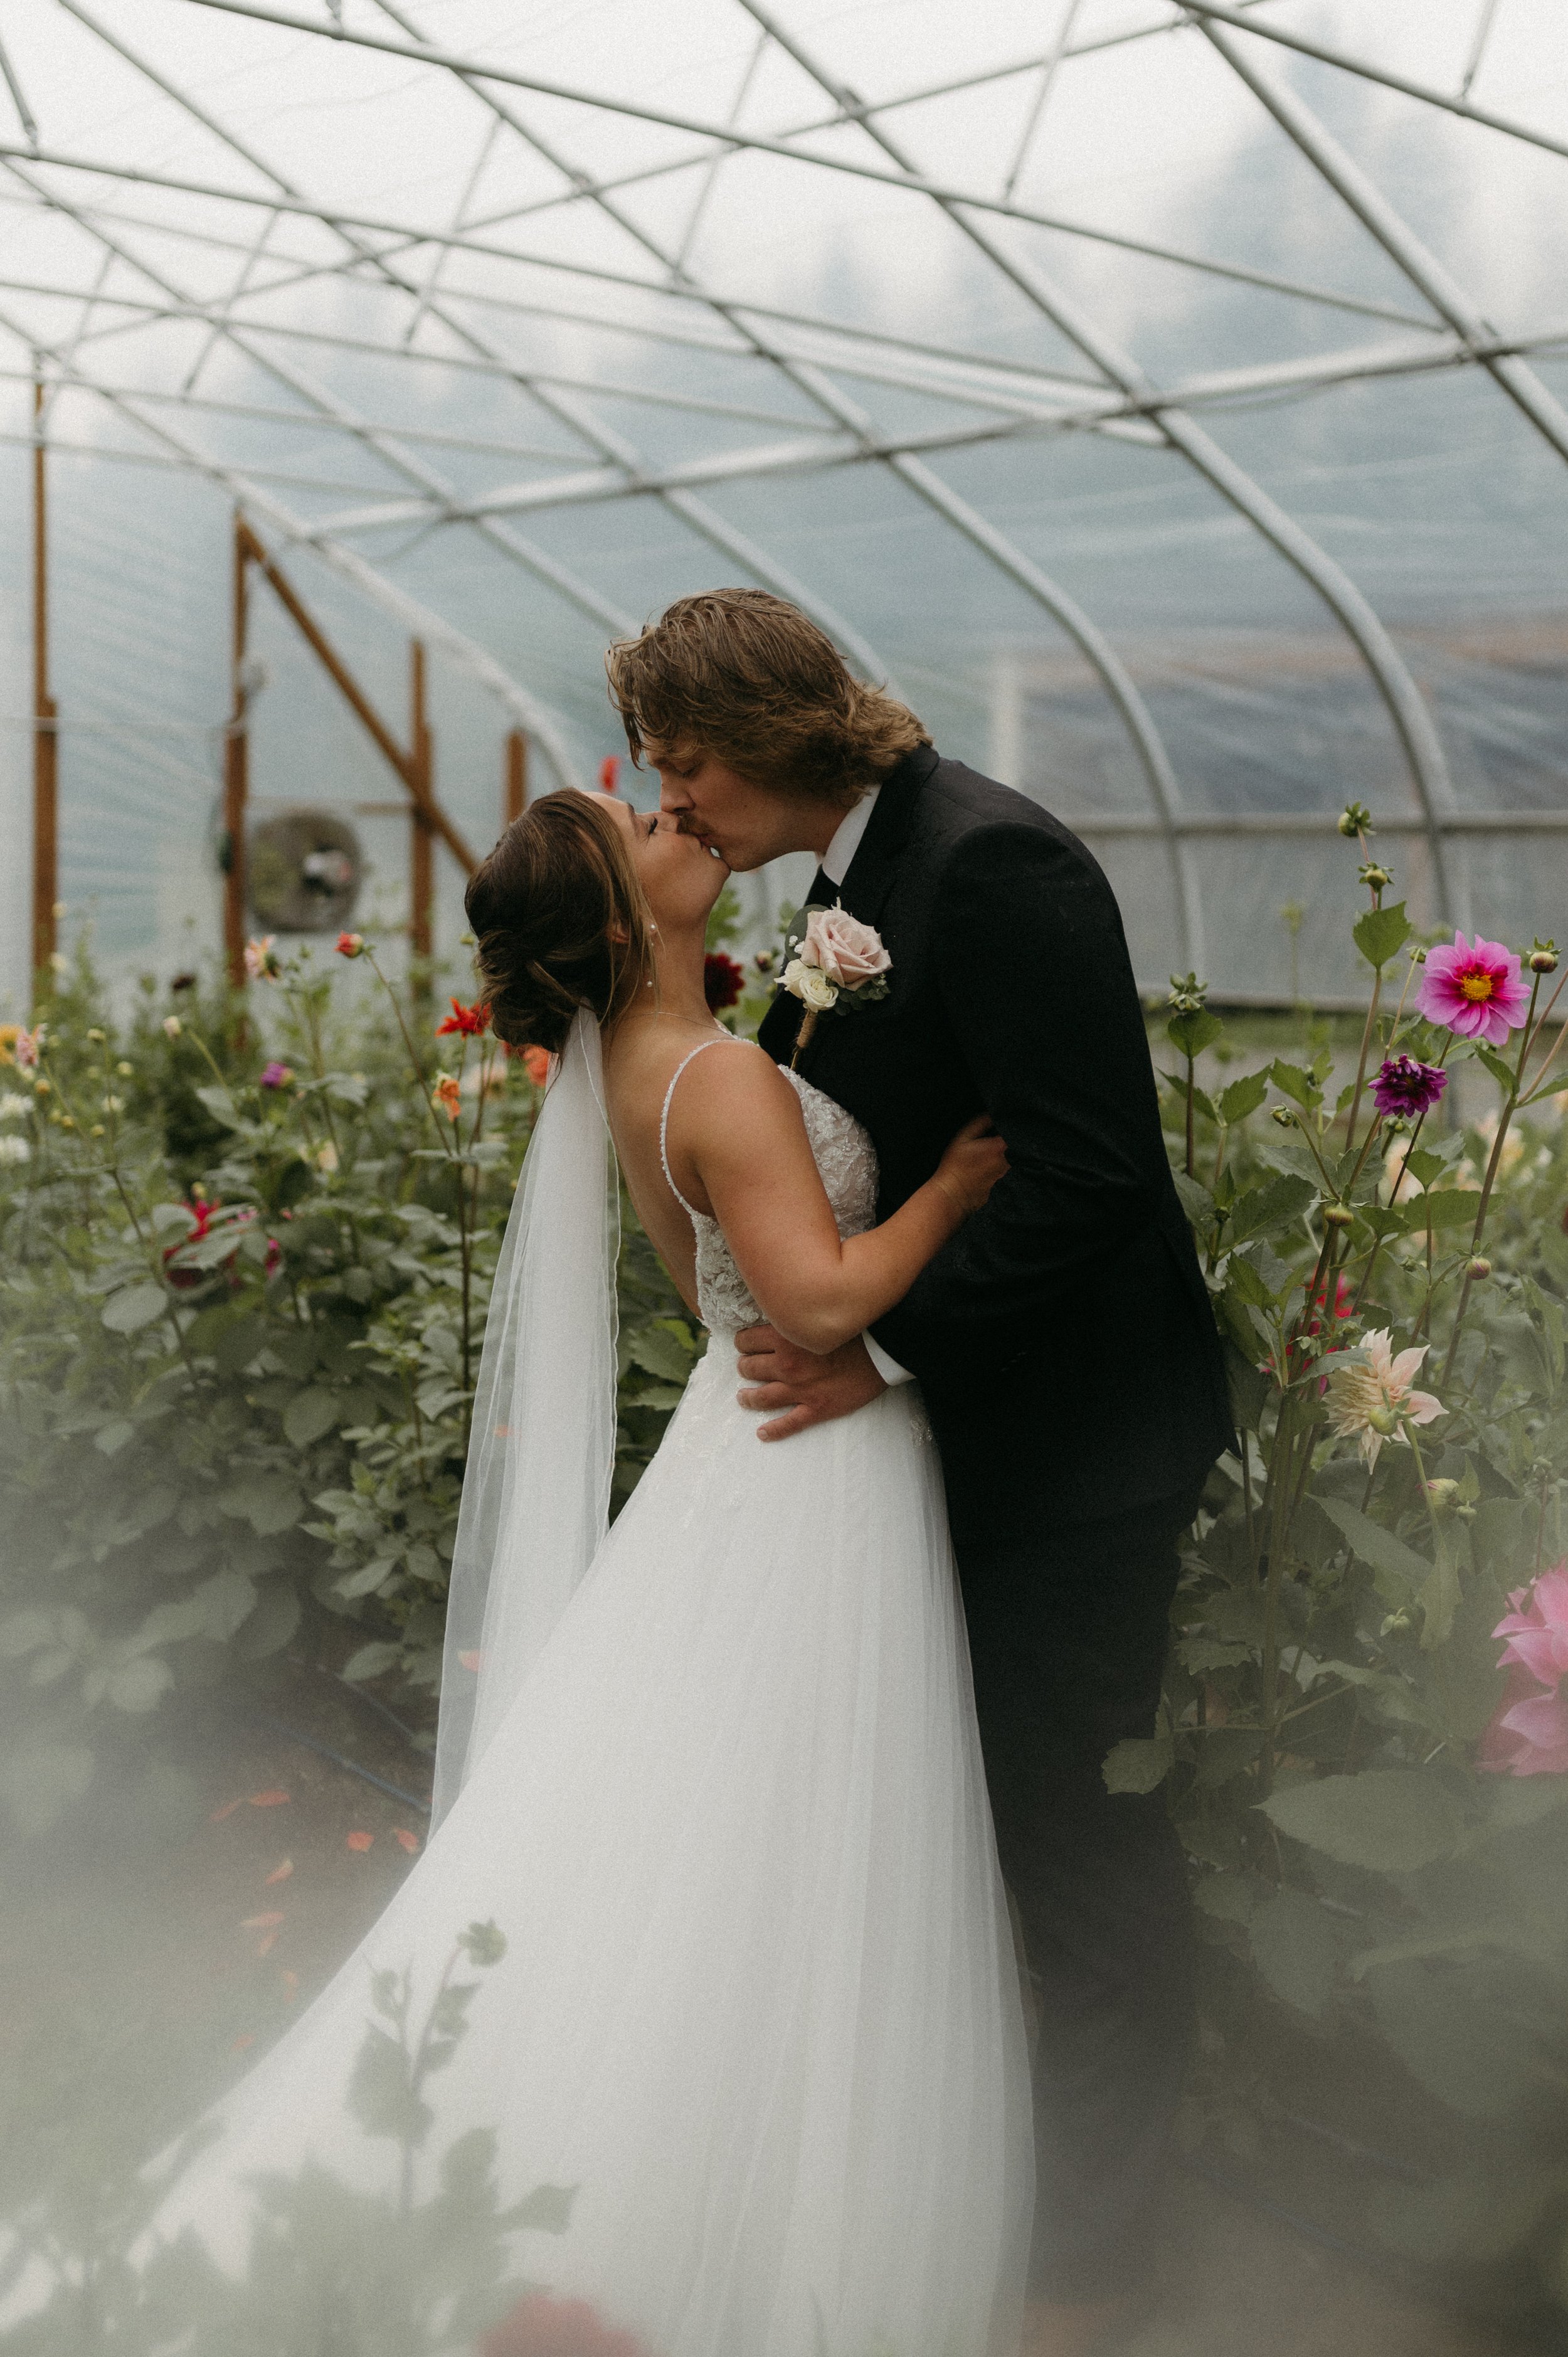 A ROMANTIC RAINY WEDDING DAY IN PALMER, ALASKA